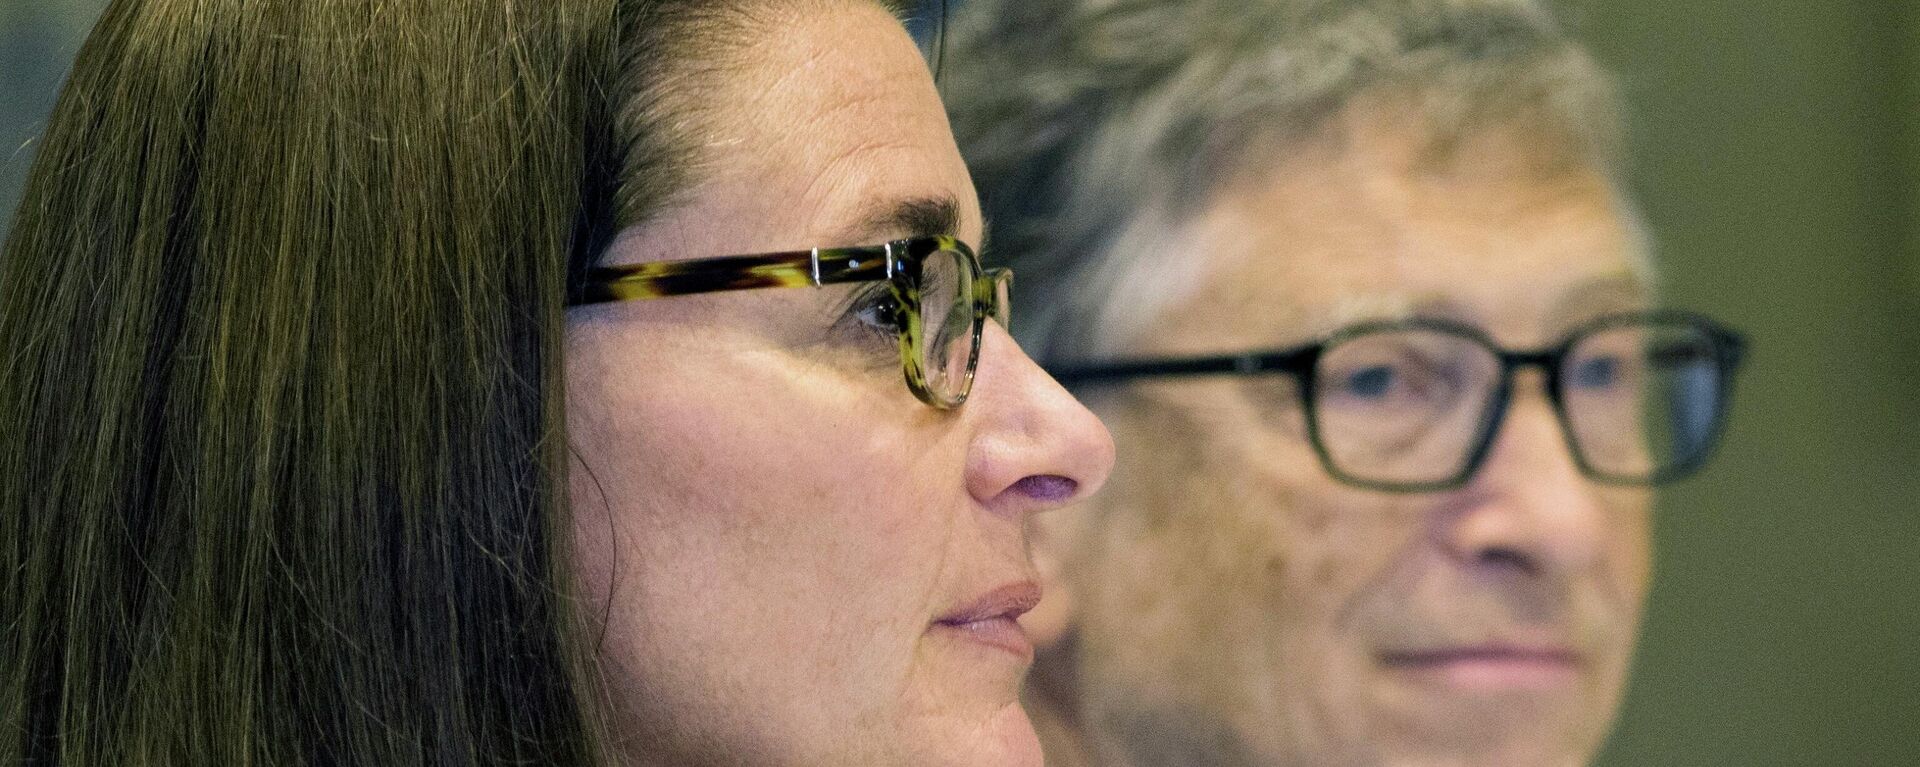 Bill y Melinda Gates en 2015 - Sputnik Mundo, 1920, 13.05.2021